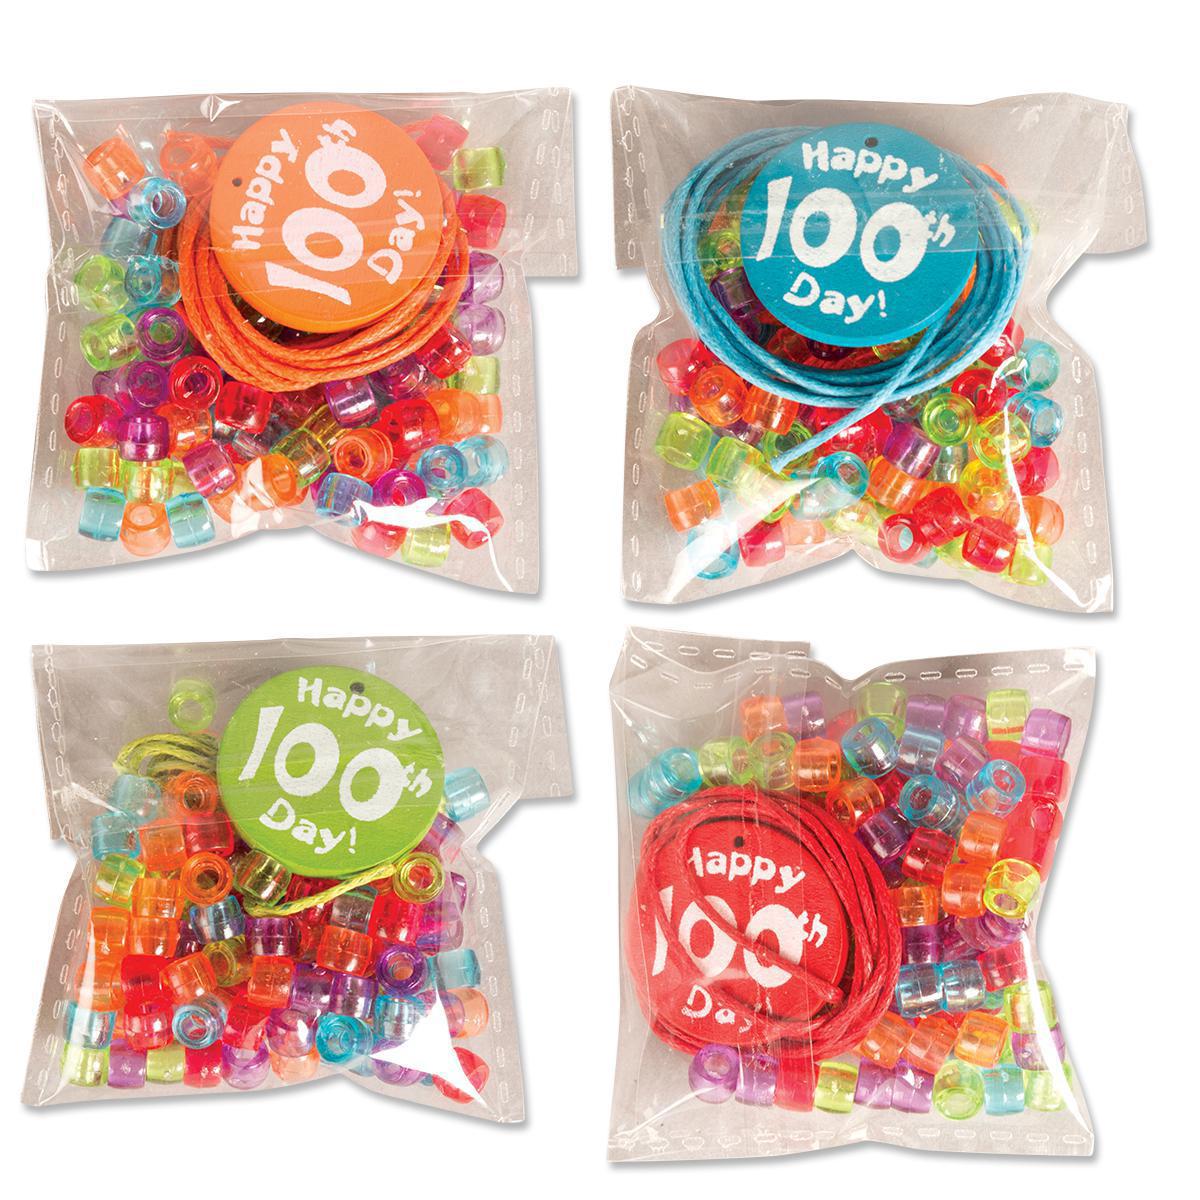  100 Days Bead Kit 12-Pack 